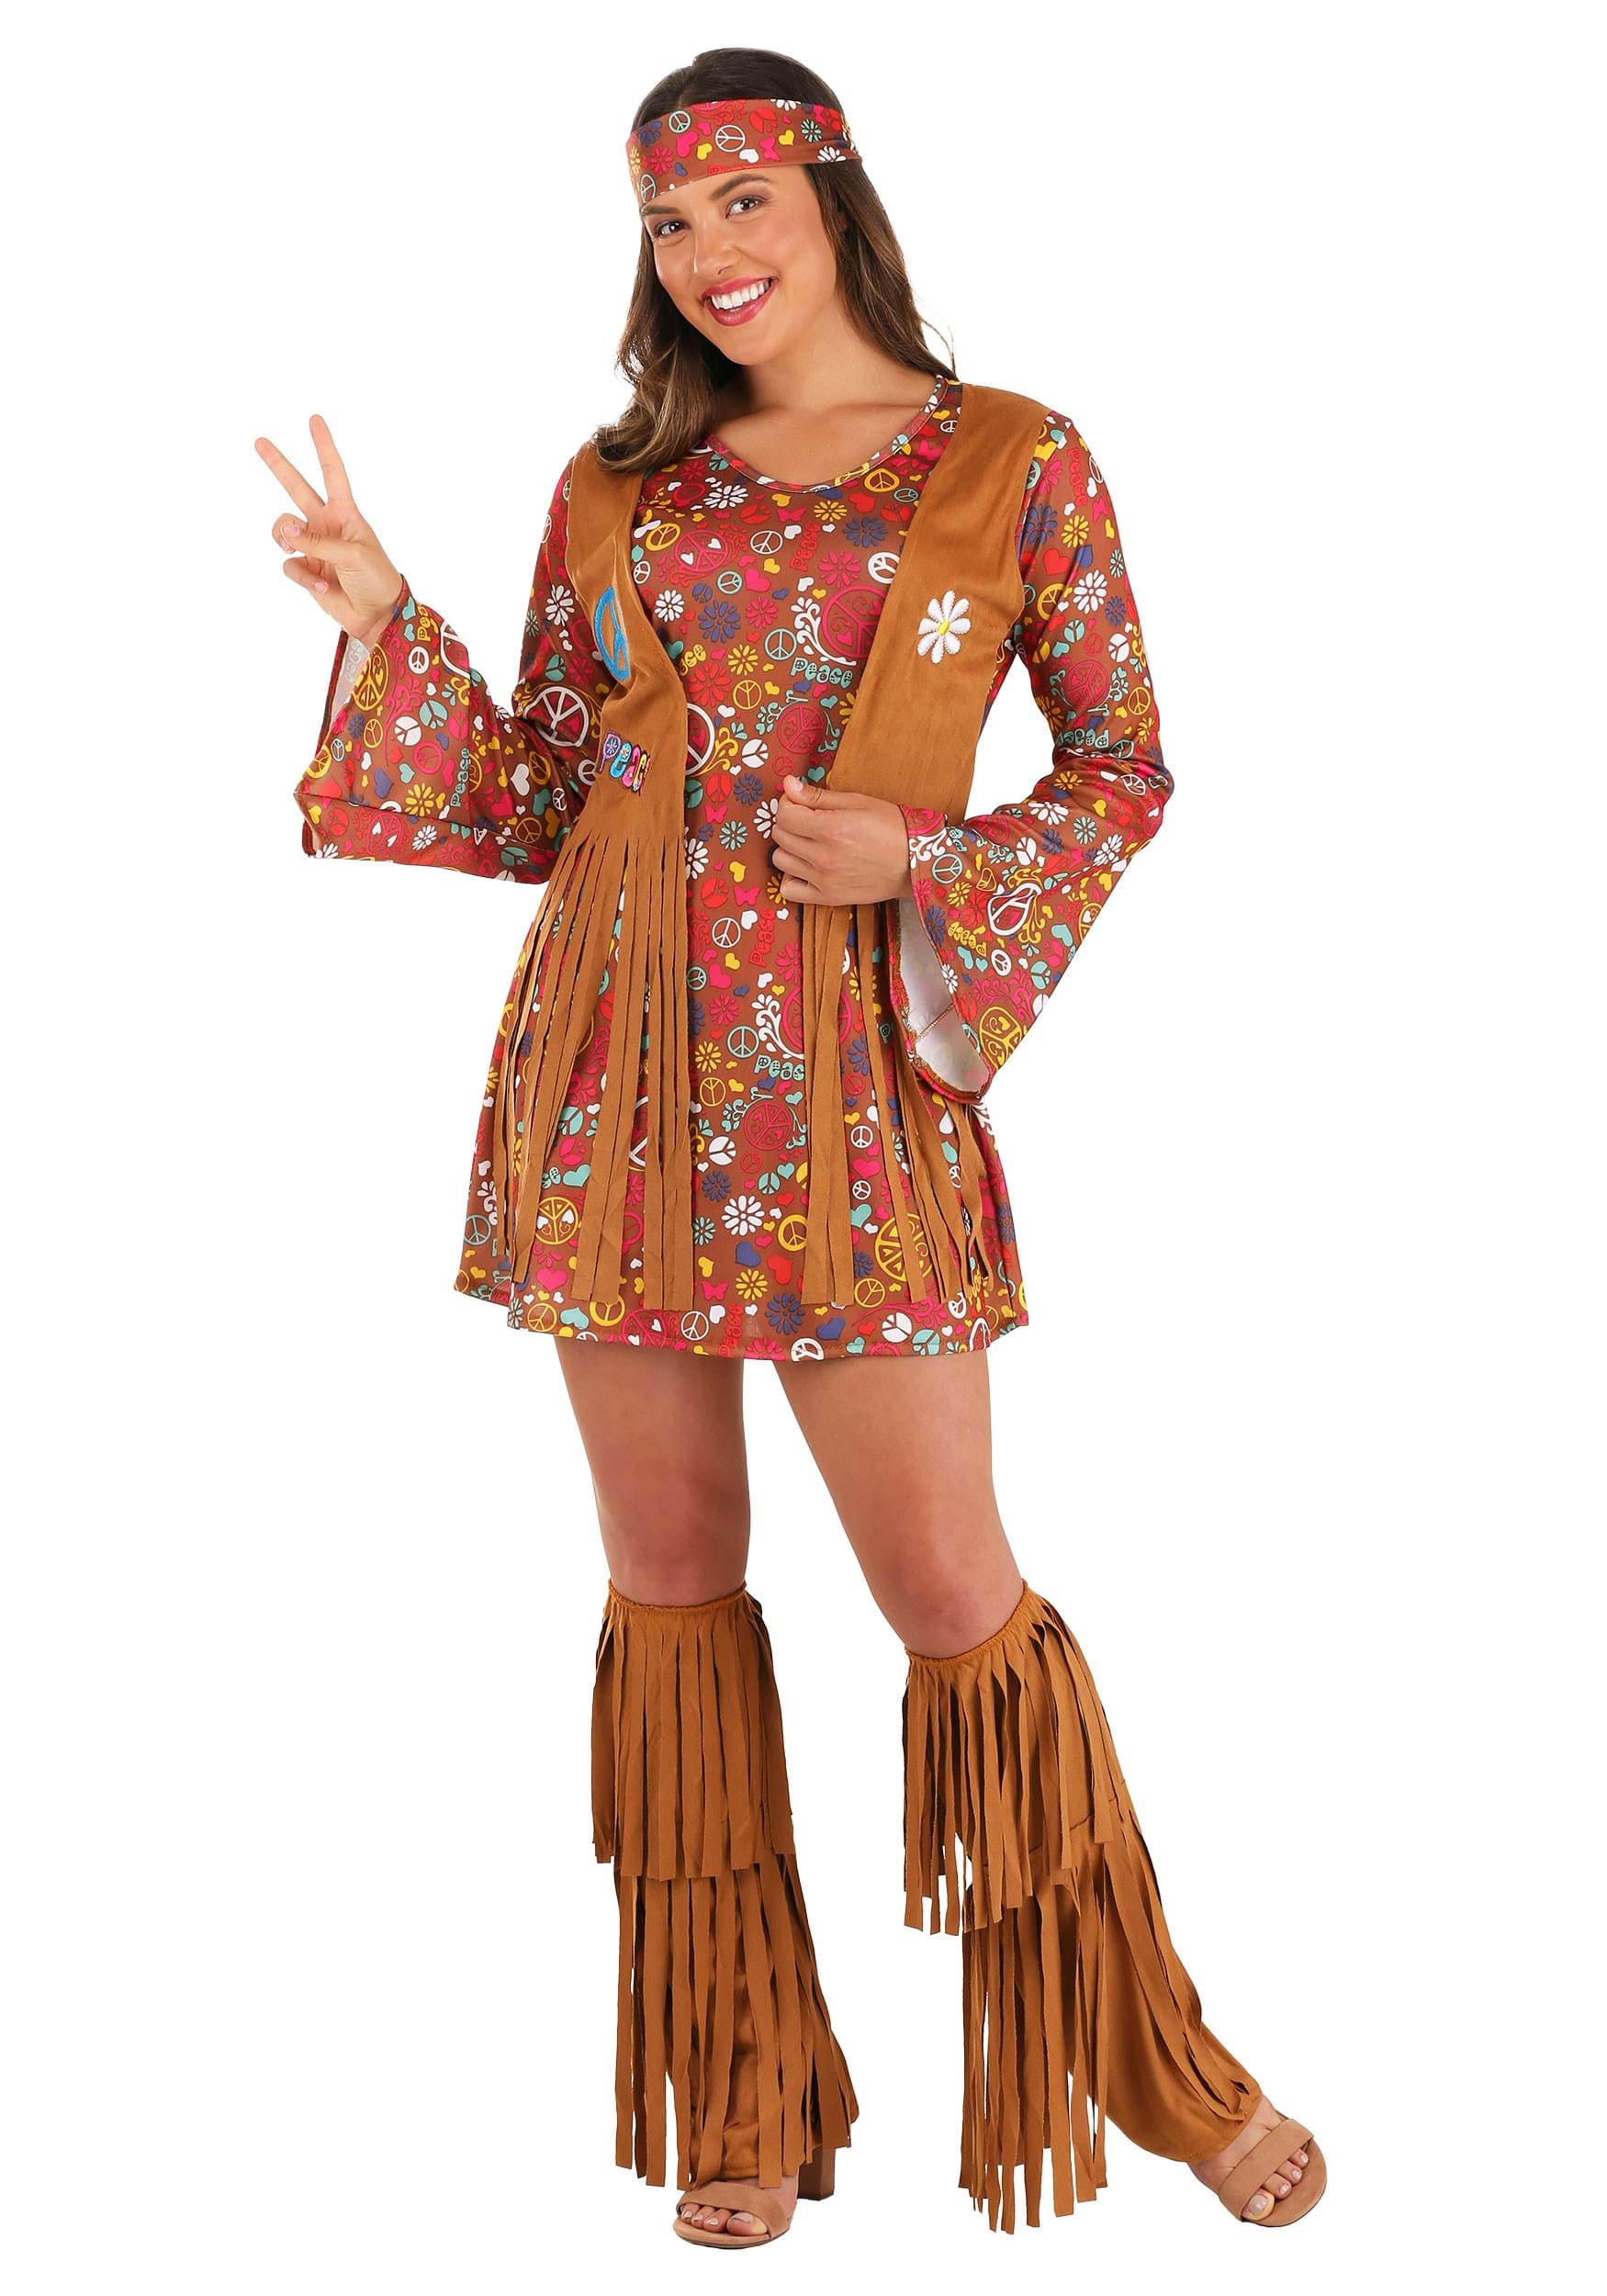 Peace & Love Hippie Costume for Women